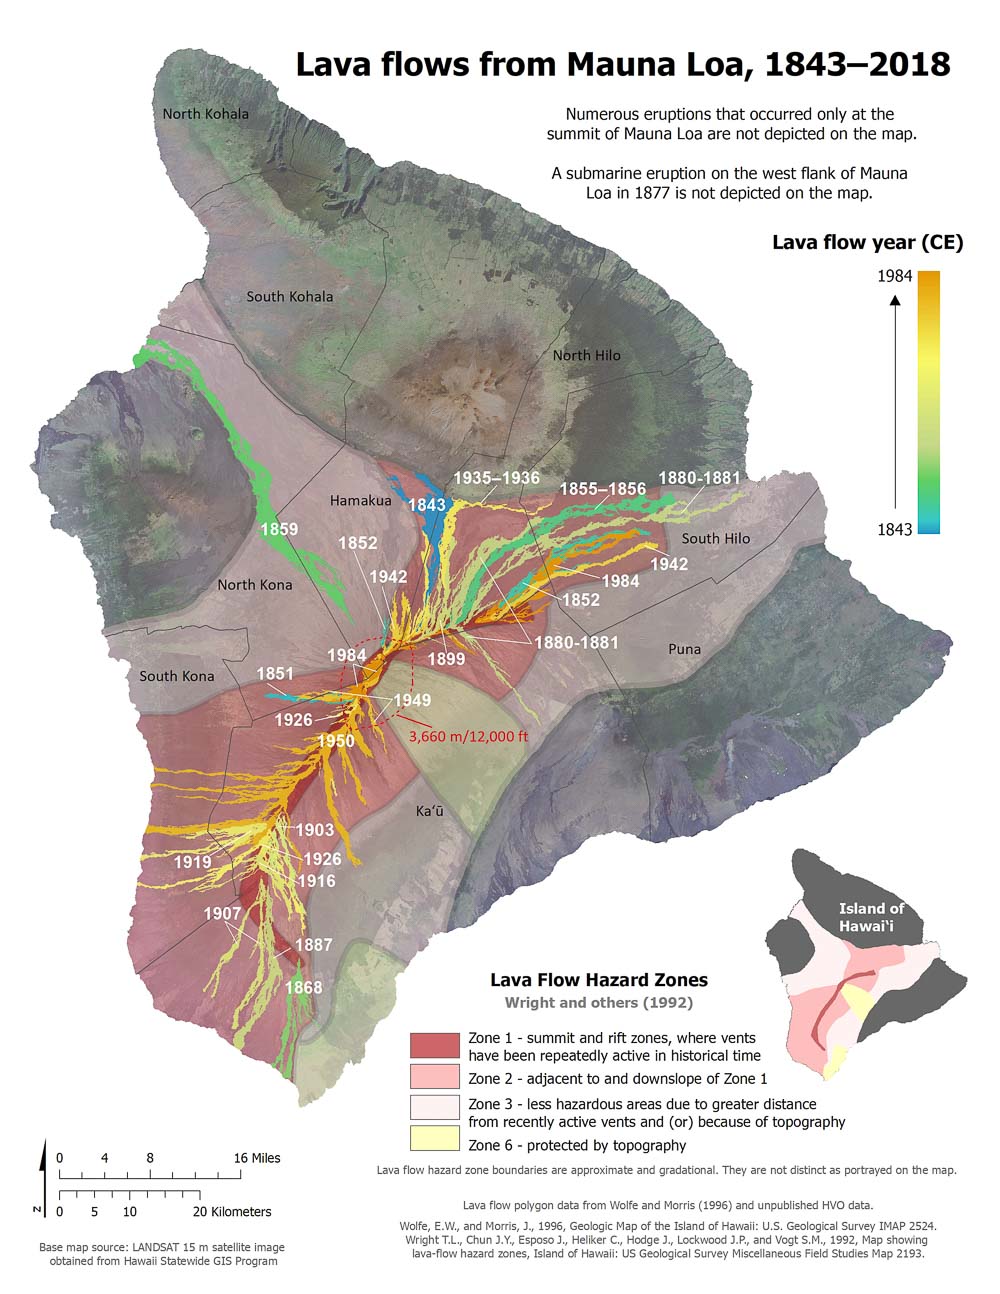 Mauna Loa historic lava flows - Image credit USGS